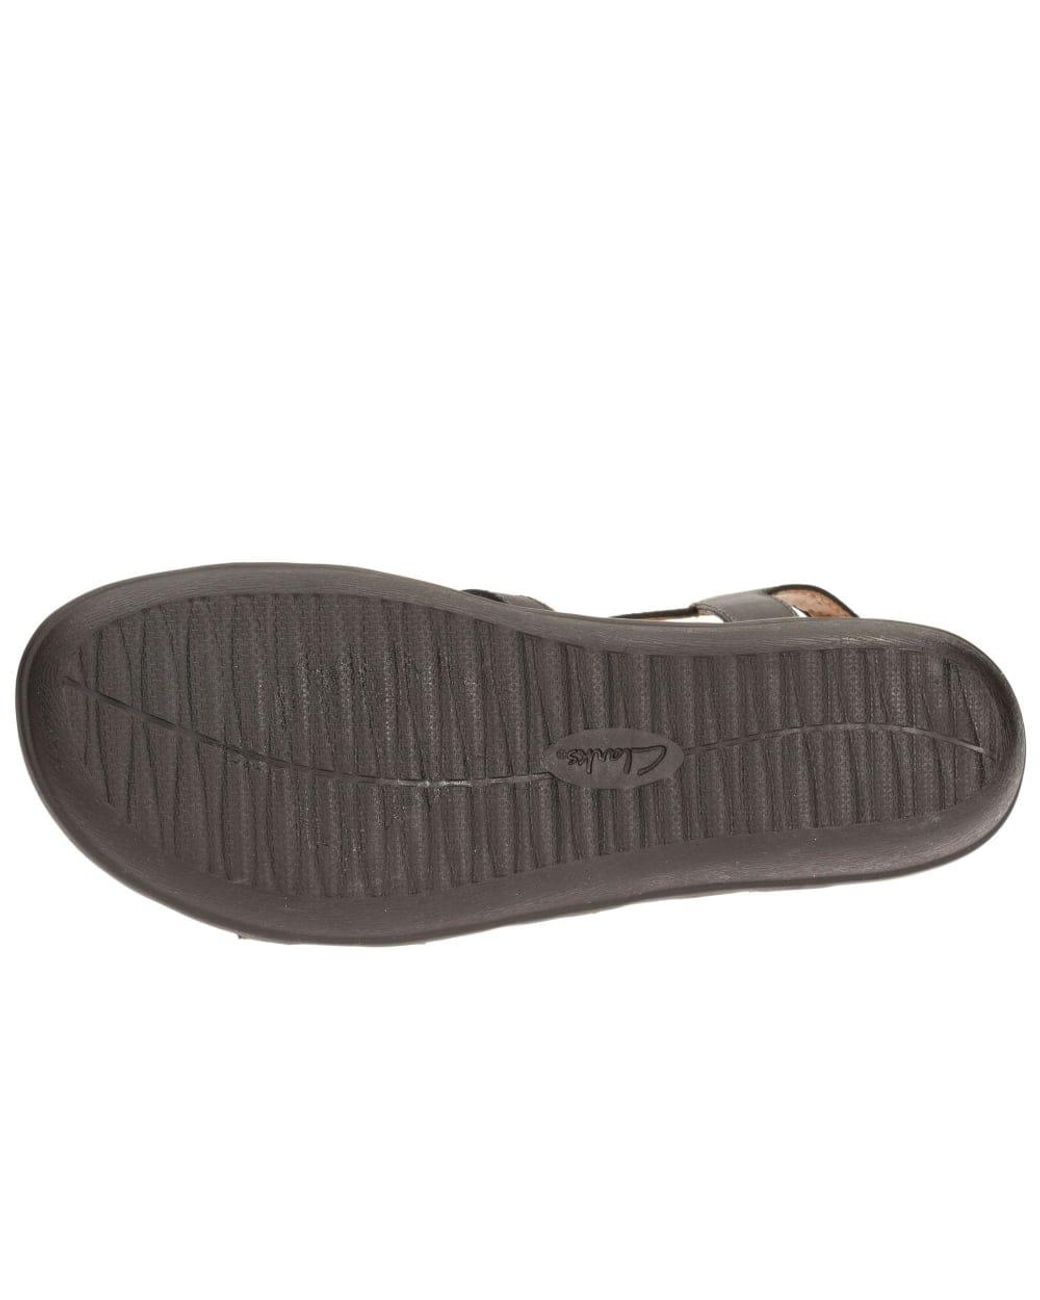 clarks manilla bonita sandals black